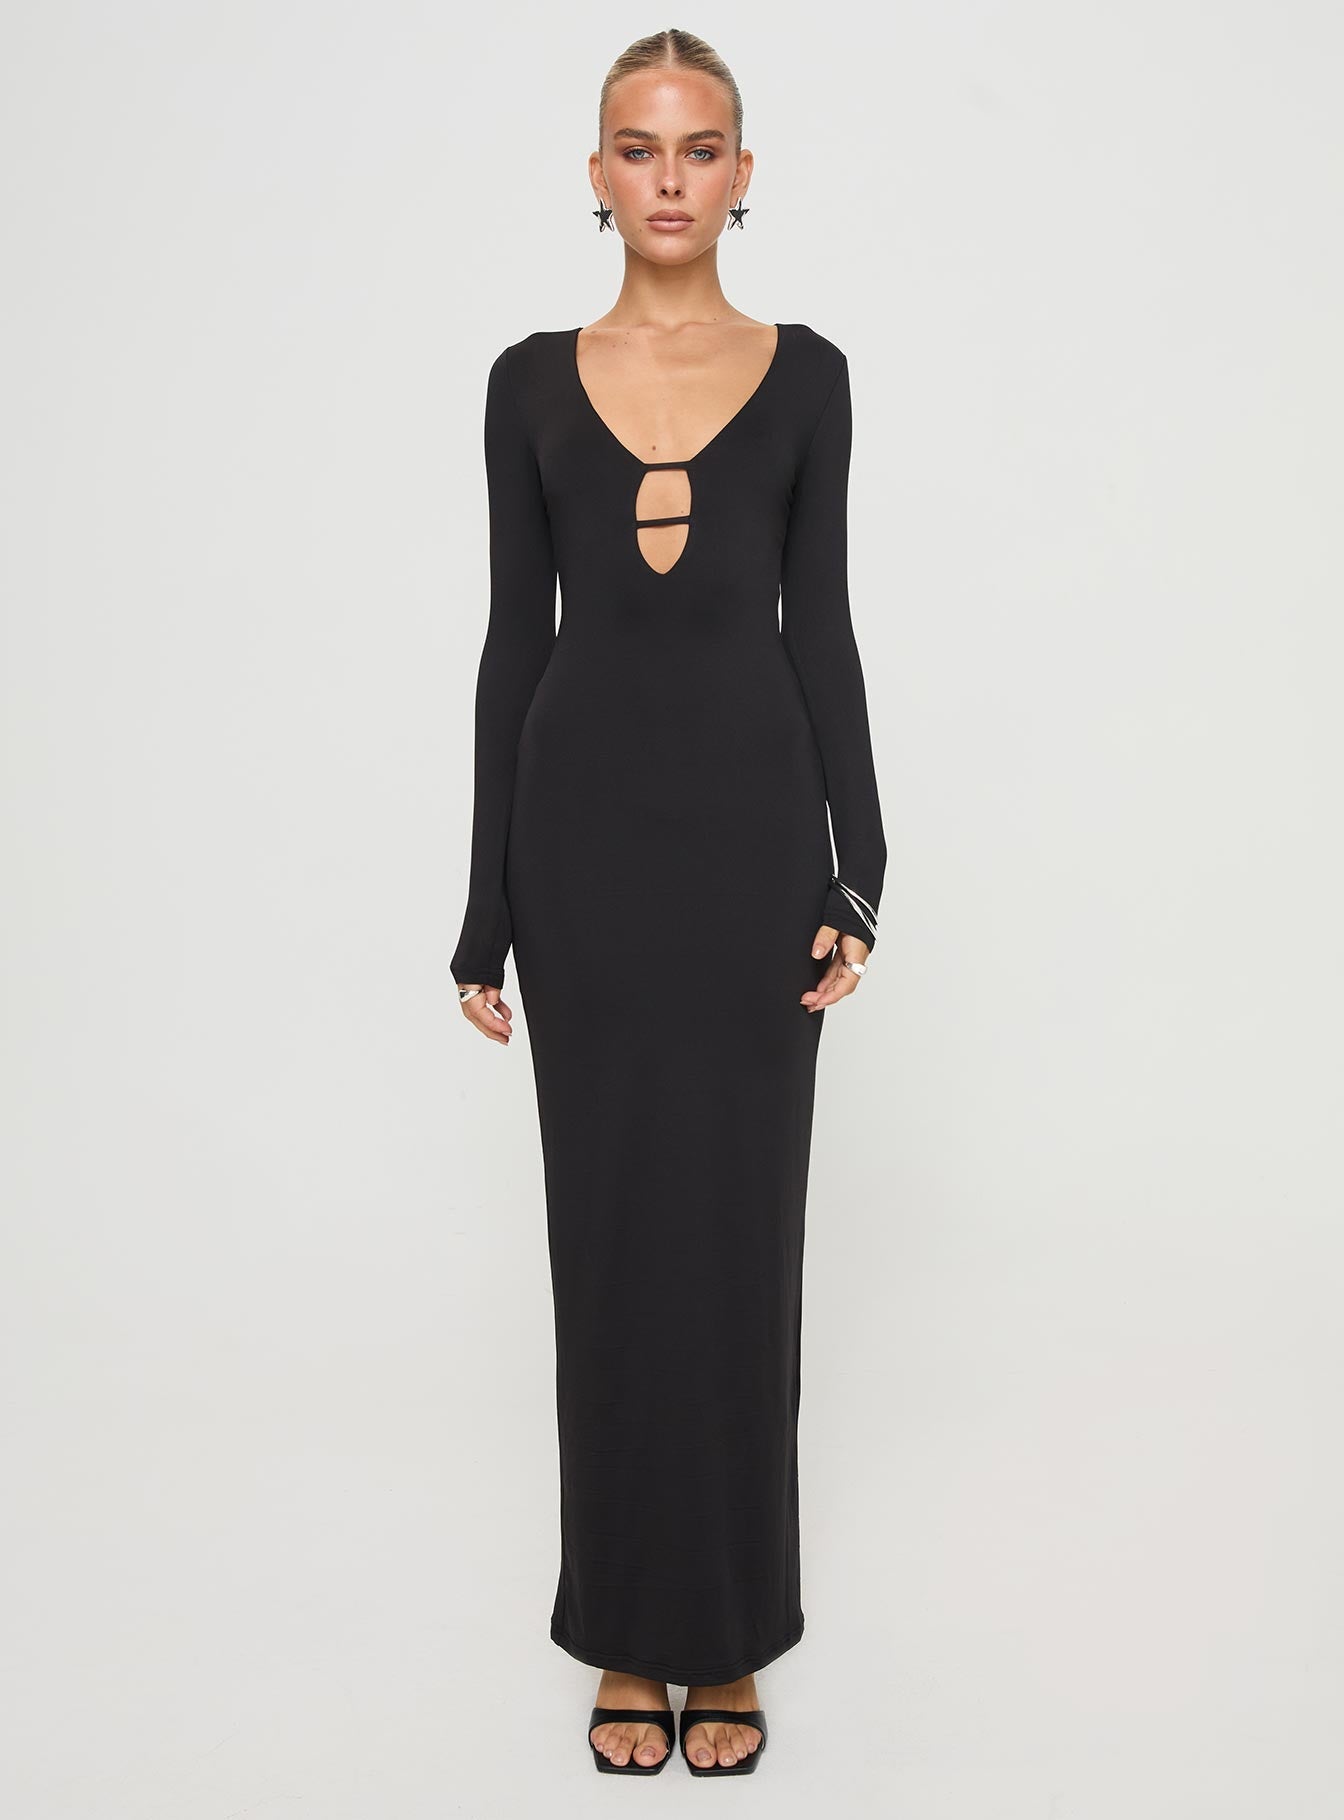 Shop Formal Dress - Lasan Long Sleeve Maxi Dress Black secondary image